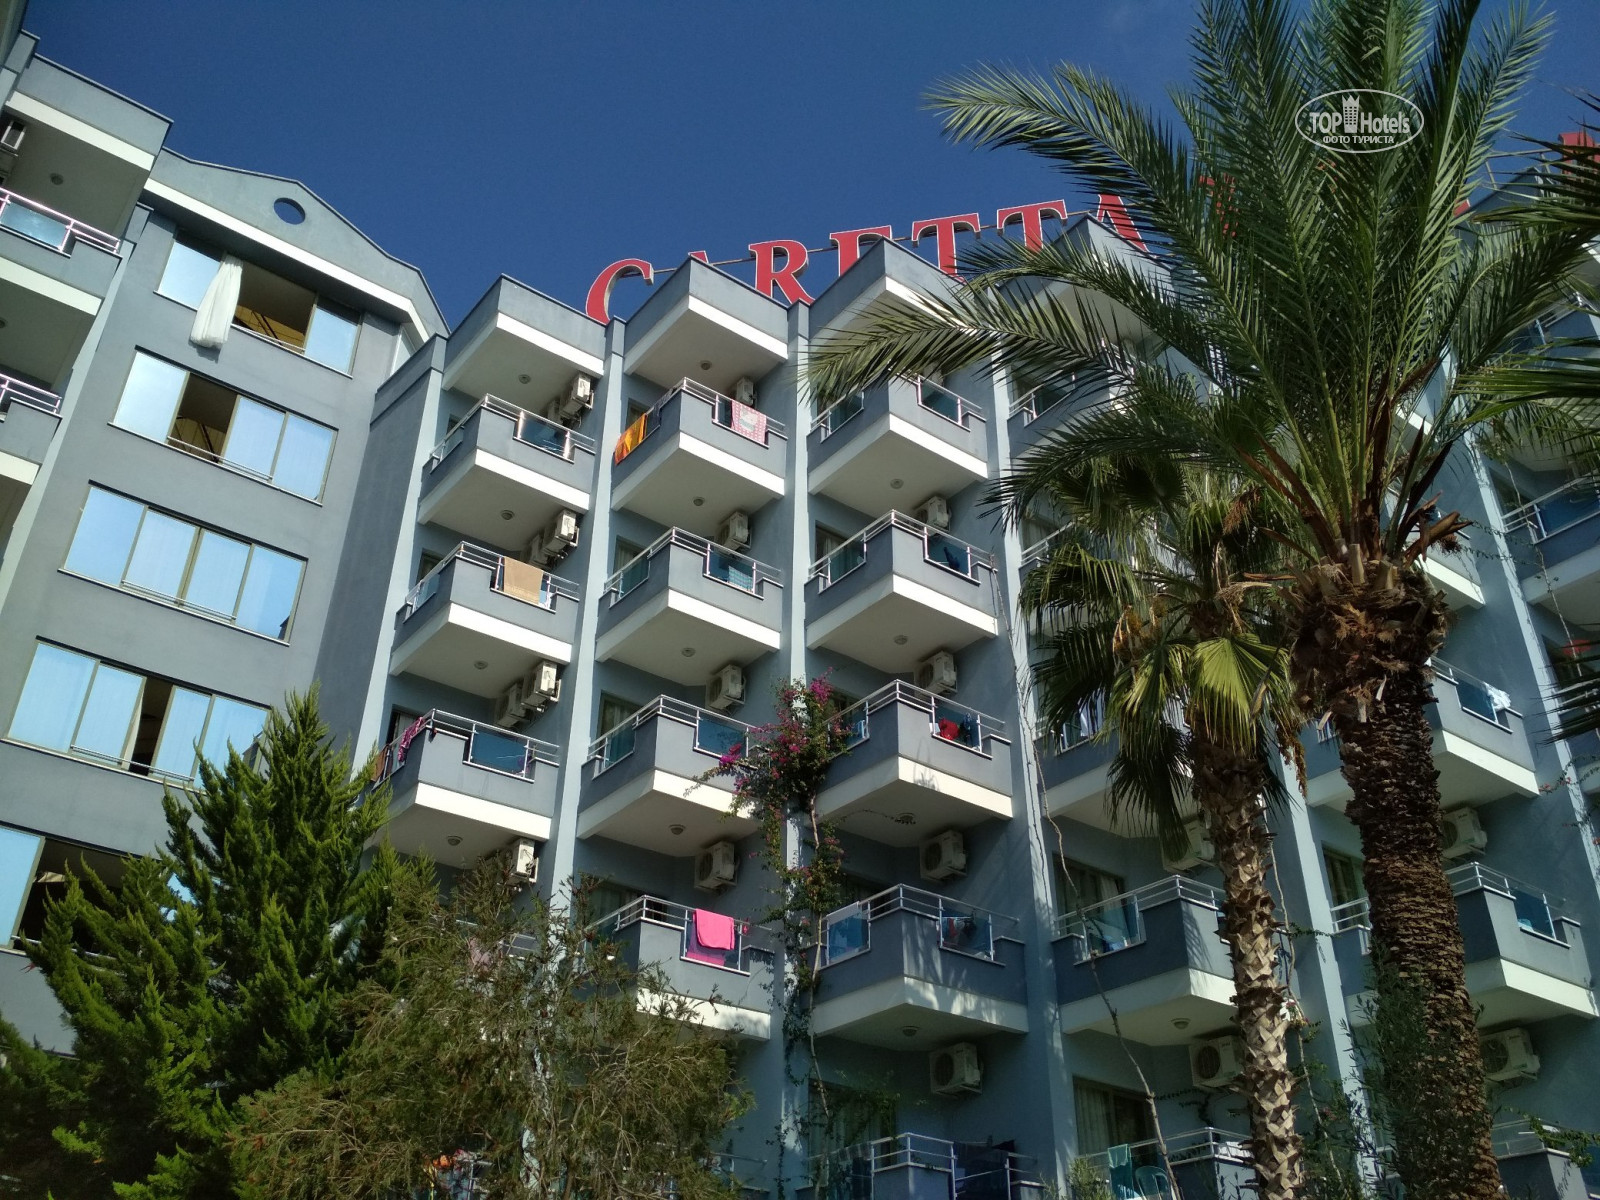 Caretta Relax Hotel, 4, zdjęcia